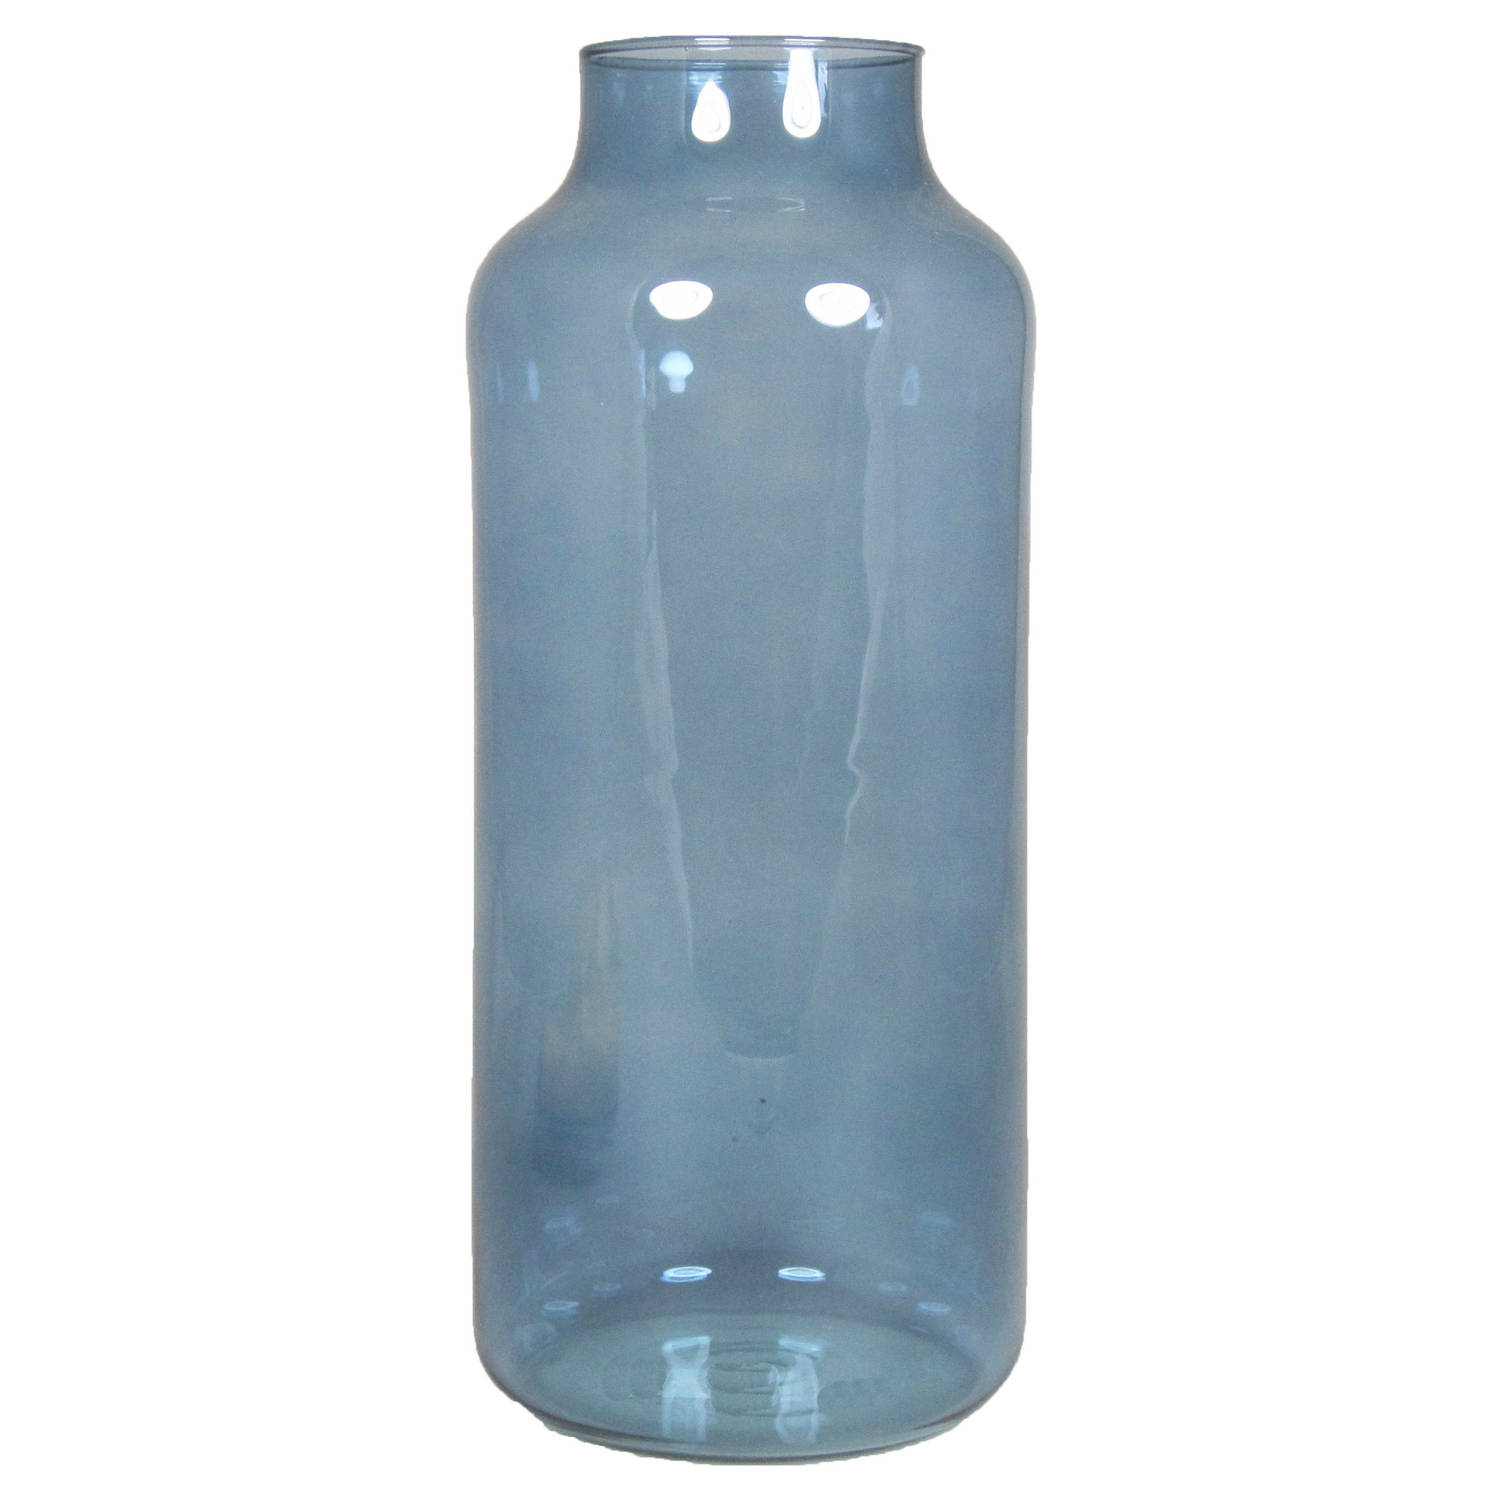 Floran Bloemenvaas - Apotheker model - blauw/transparant glas - H35 x D15 cm